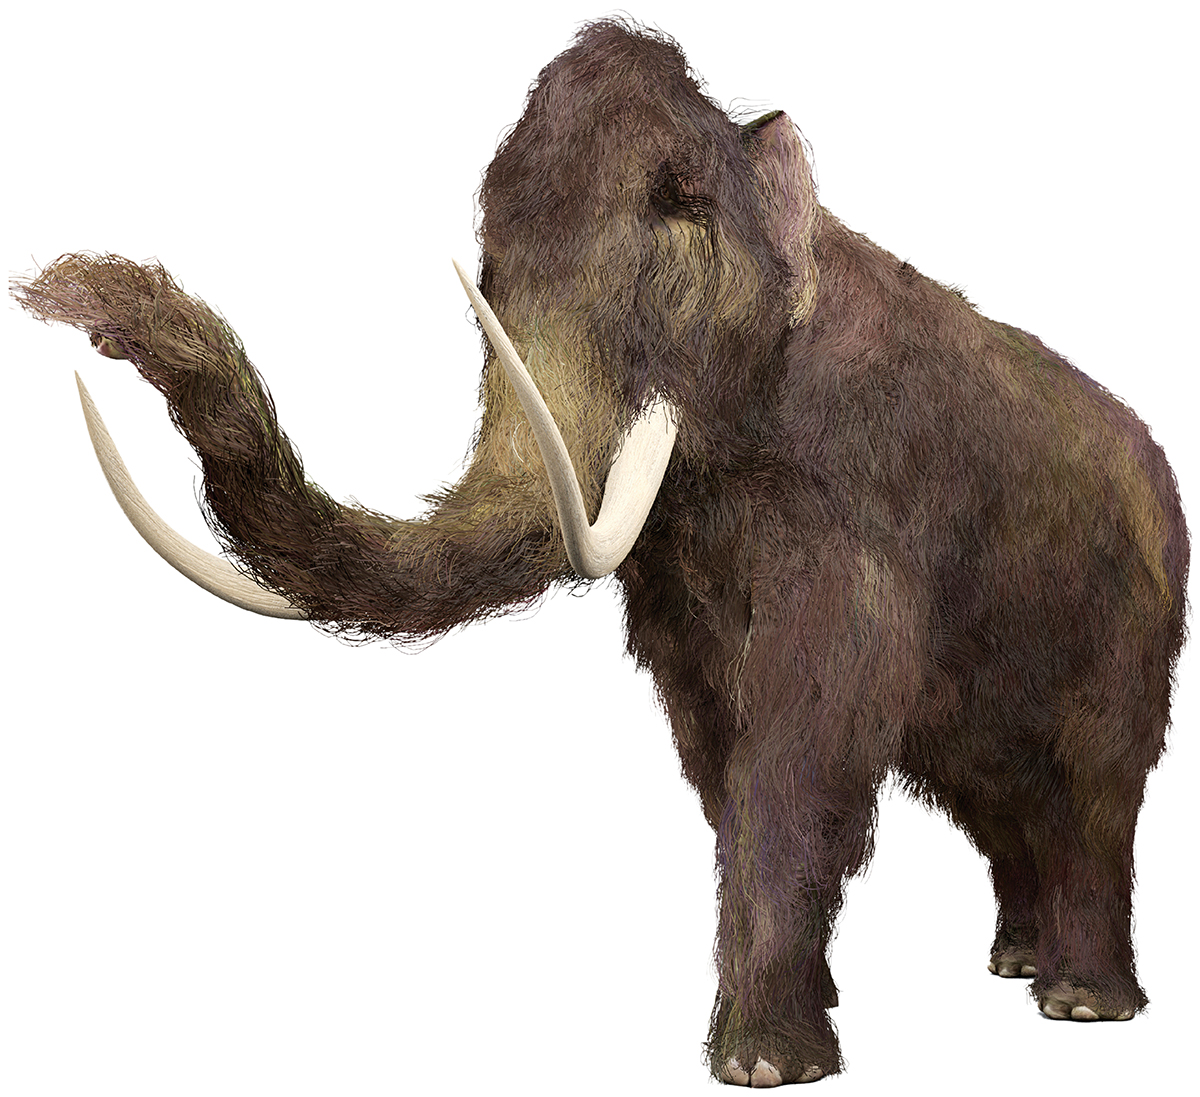 CRISPR-Cas9 woolly mammoth